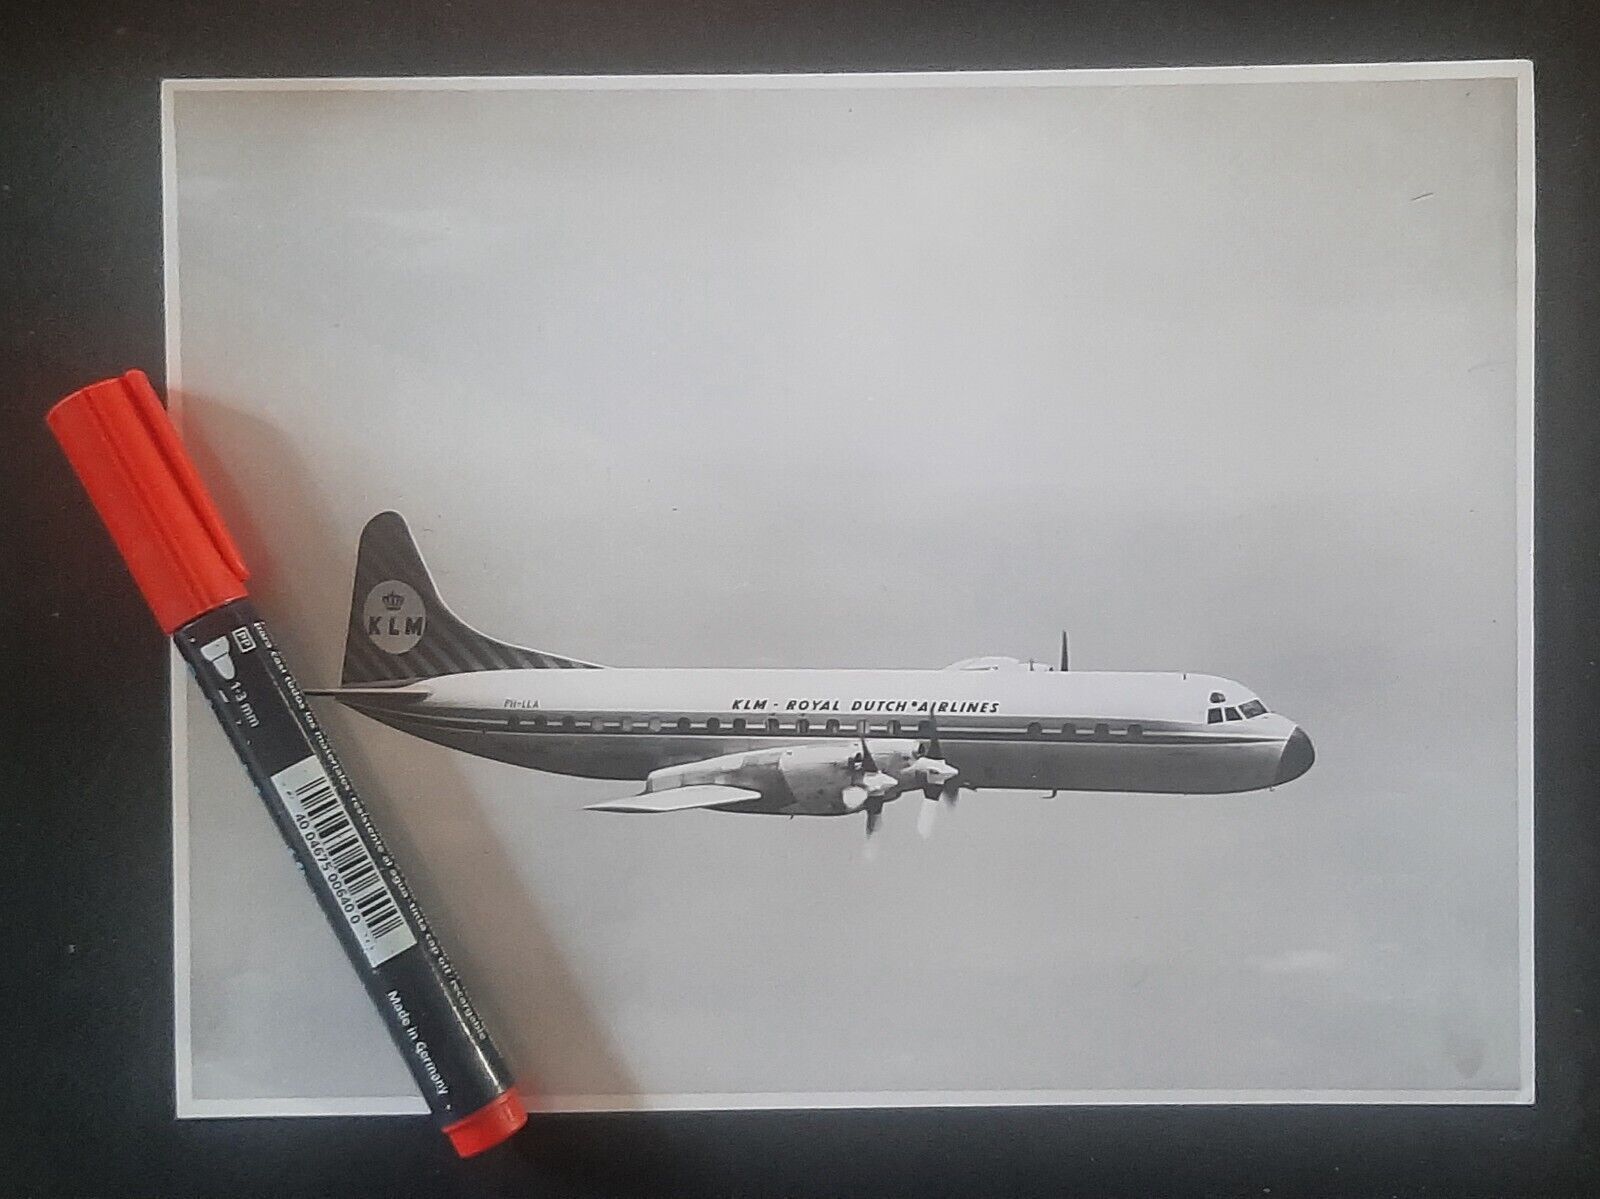 Lockheed L-188 Electra PH-LLA large original KLM issued photo 7x9.5 not sepia